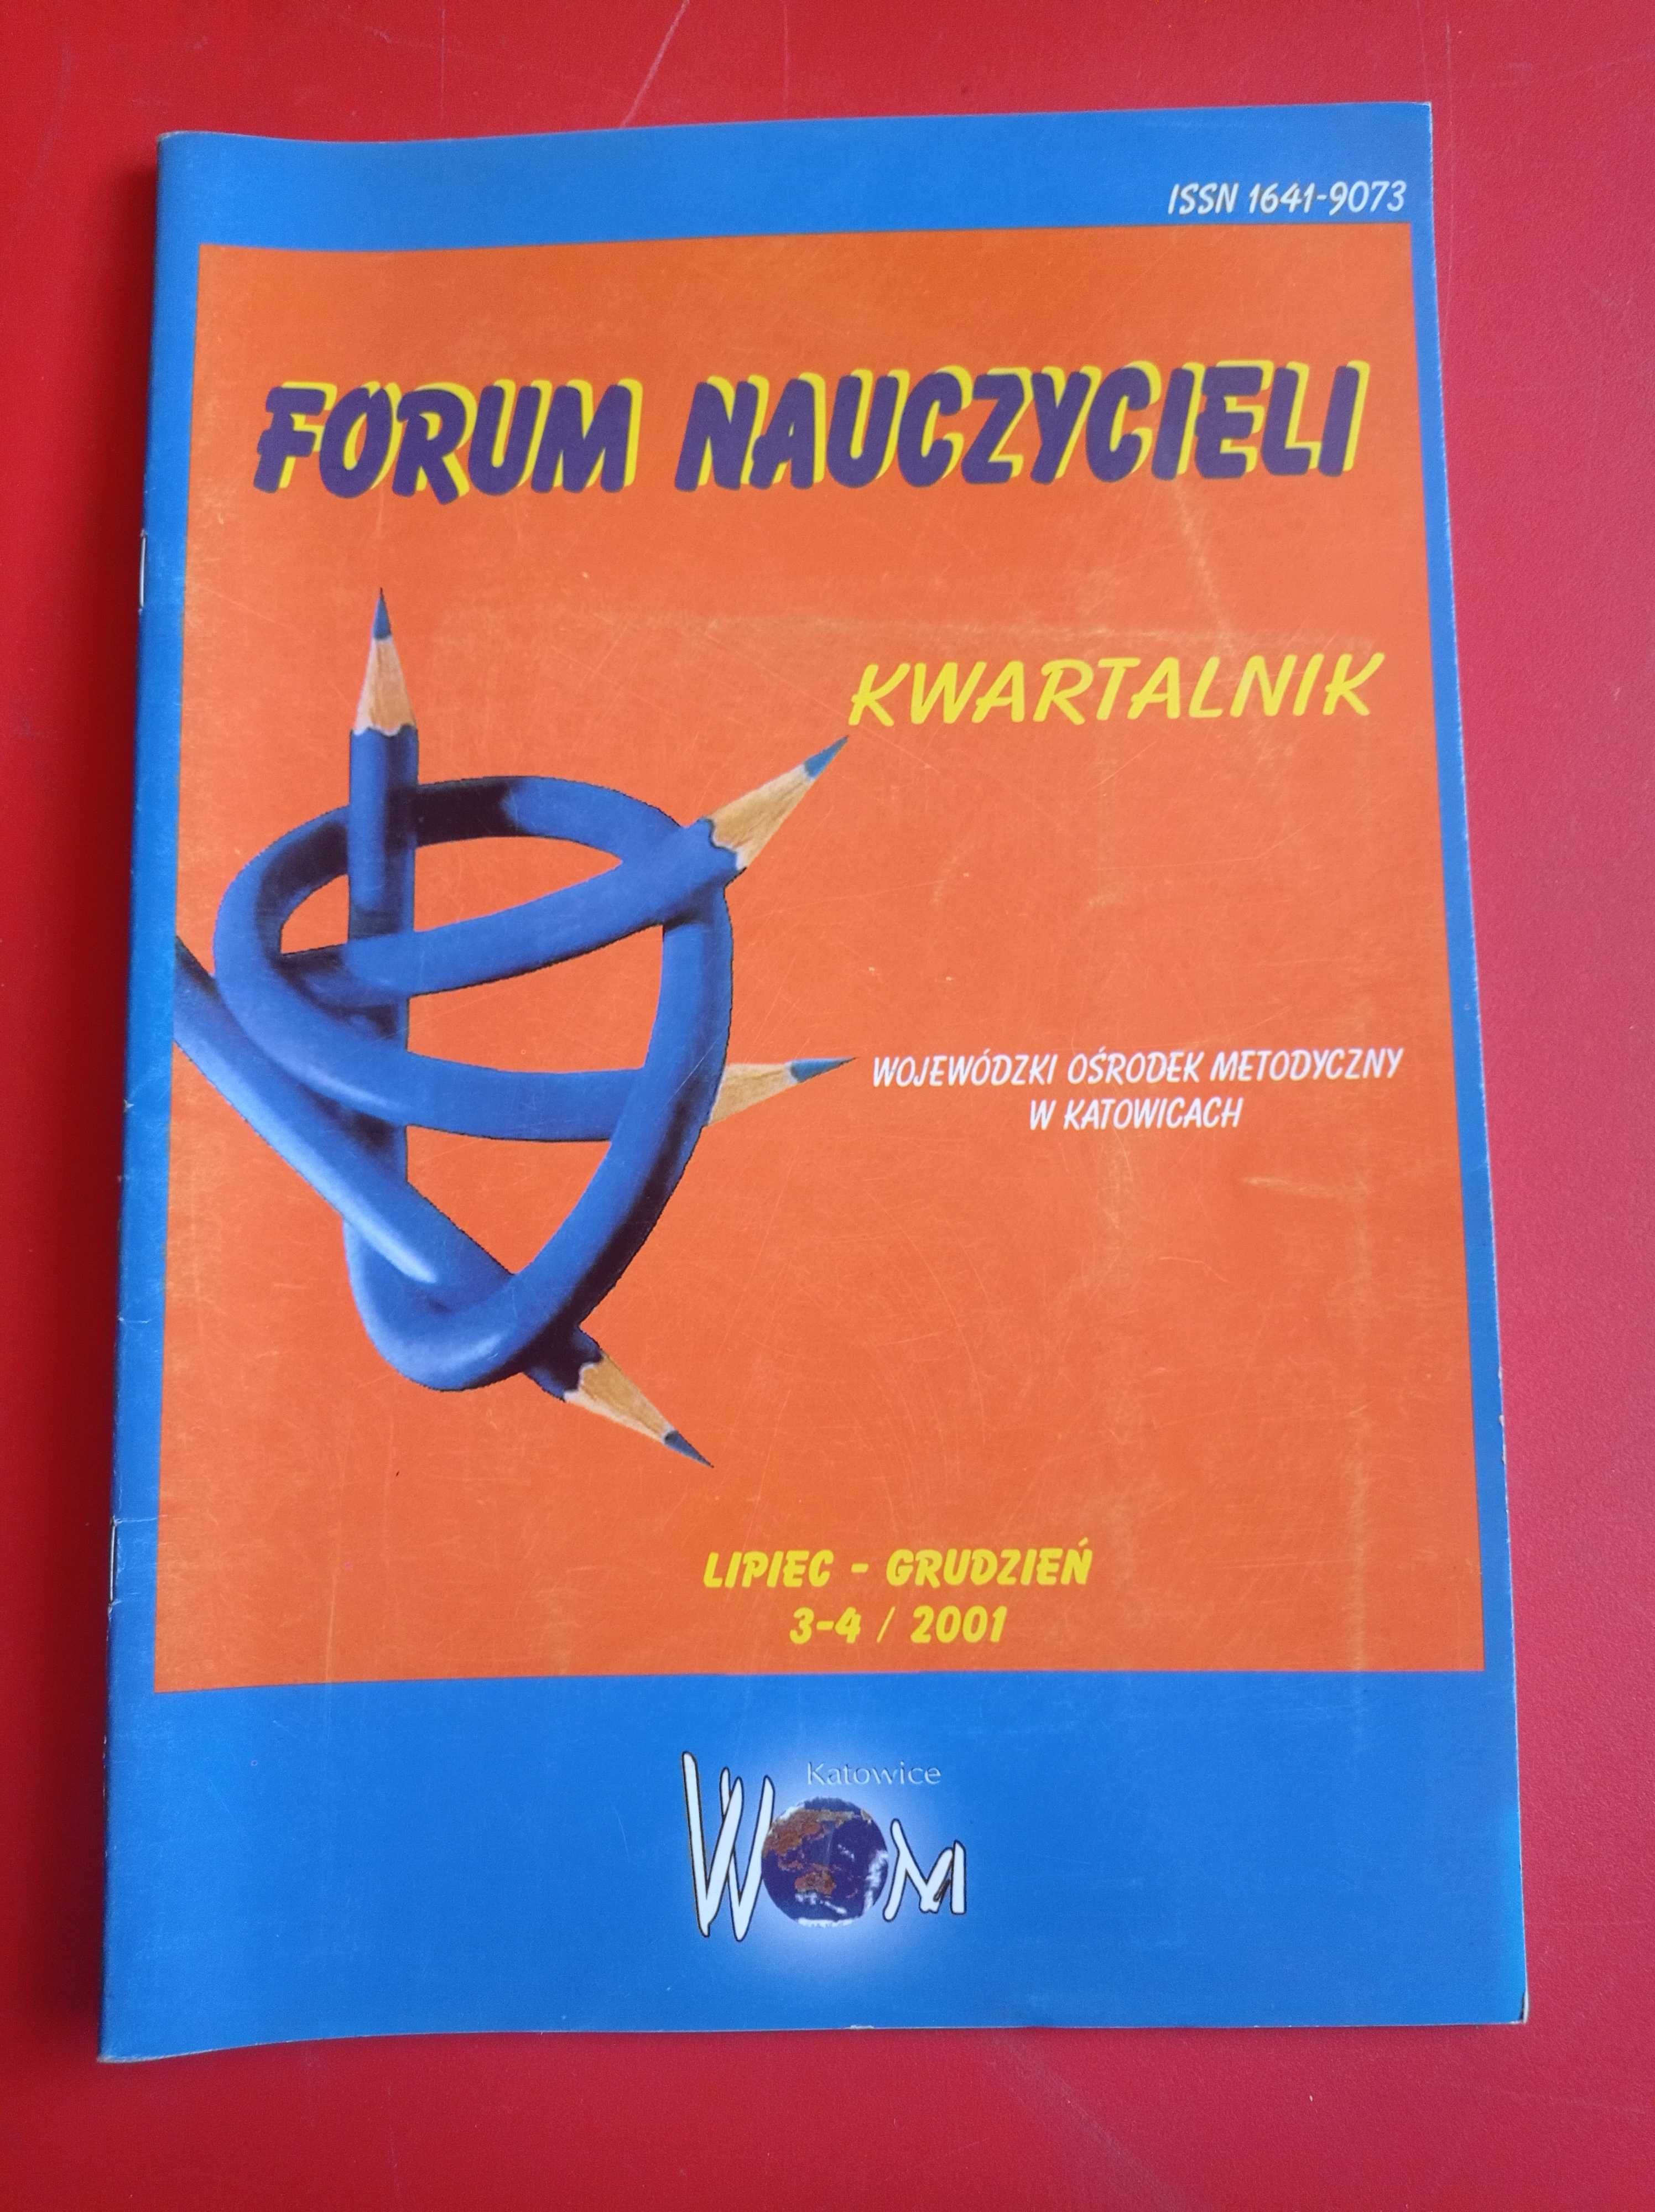 Forum nauczycieli, kwartalnik, lipiec-grudzień 2001, 3-4/2001